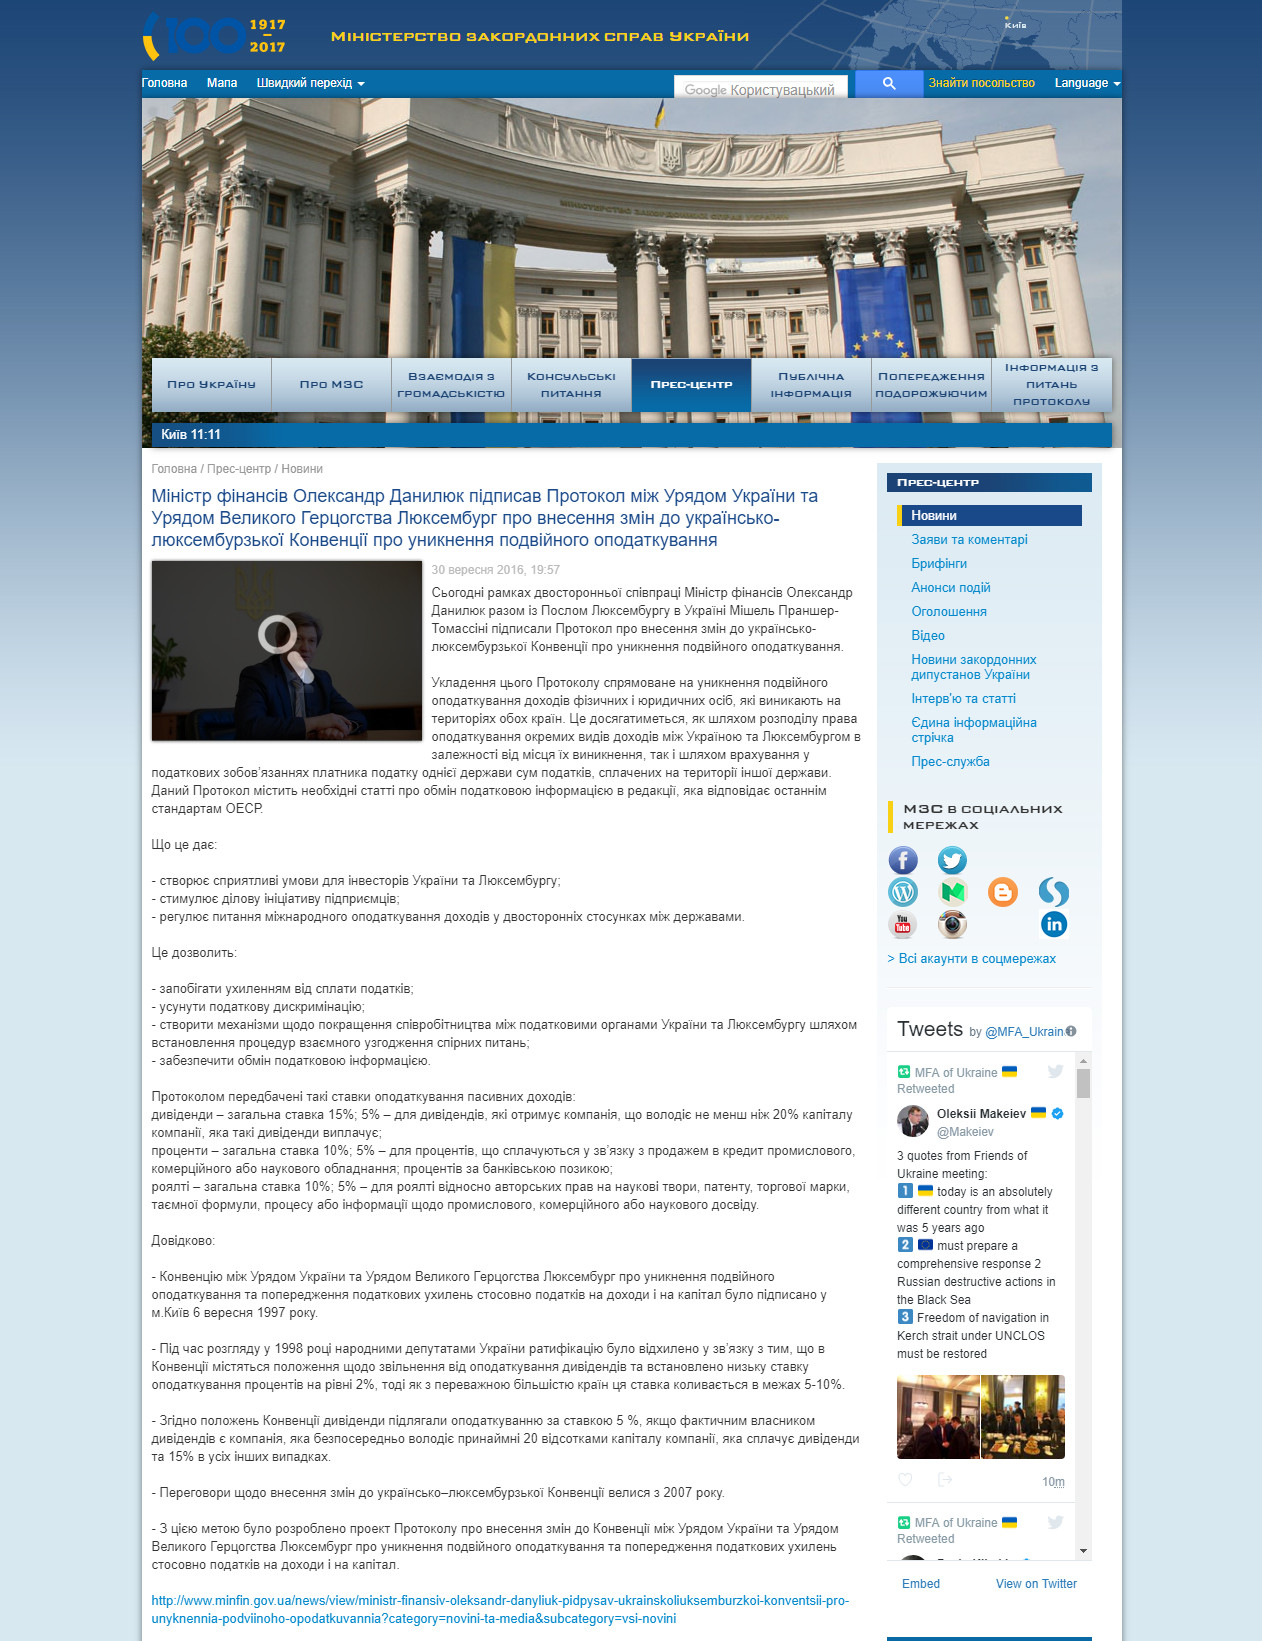 https://mfa.gov.ua/ua/press-center/news/51297-30-veresnya-2016-r-ministr-finansiv-oleksandr-danilyuk-pidpisav-ukrajinsyko-lyuksemburzykoji-konvenciji-pro-uniknennya-podvijnogo-opodatkuvannya